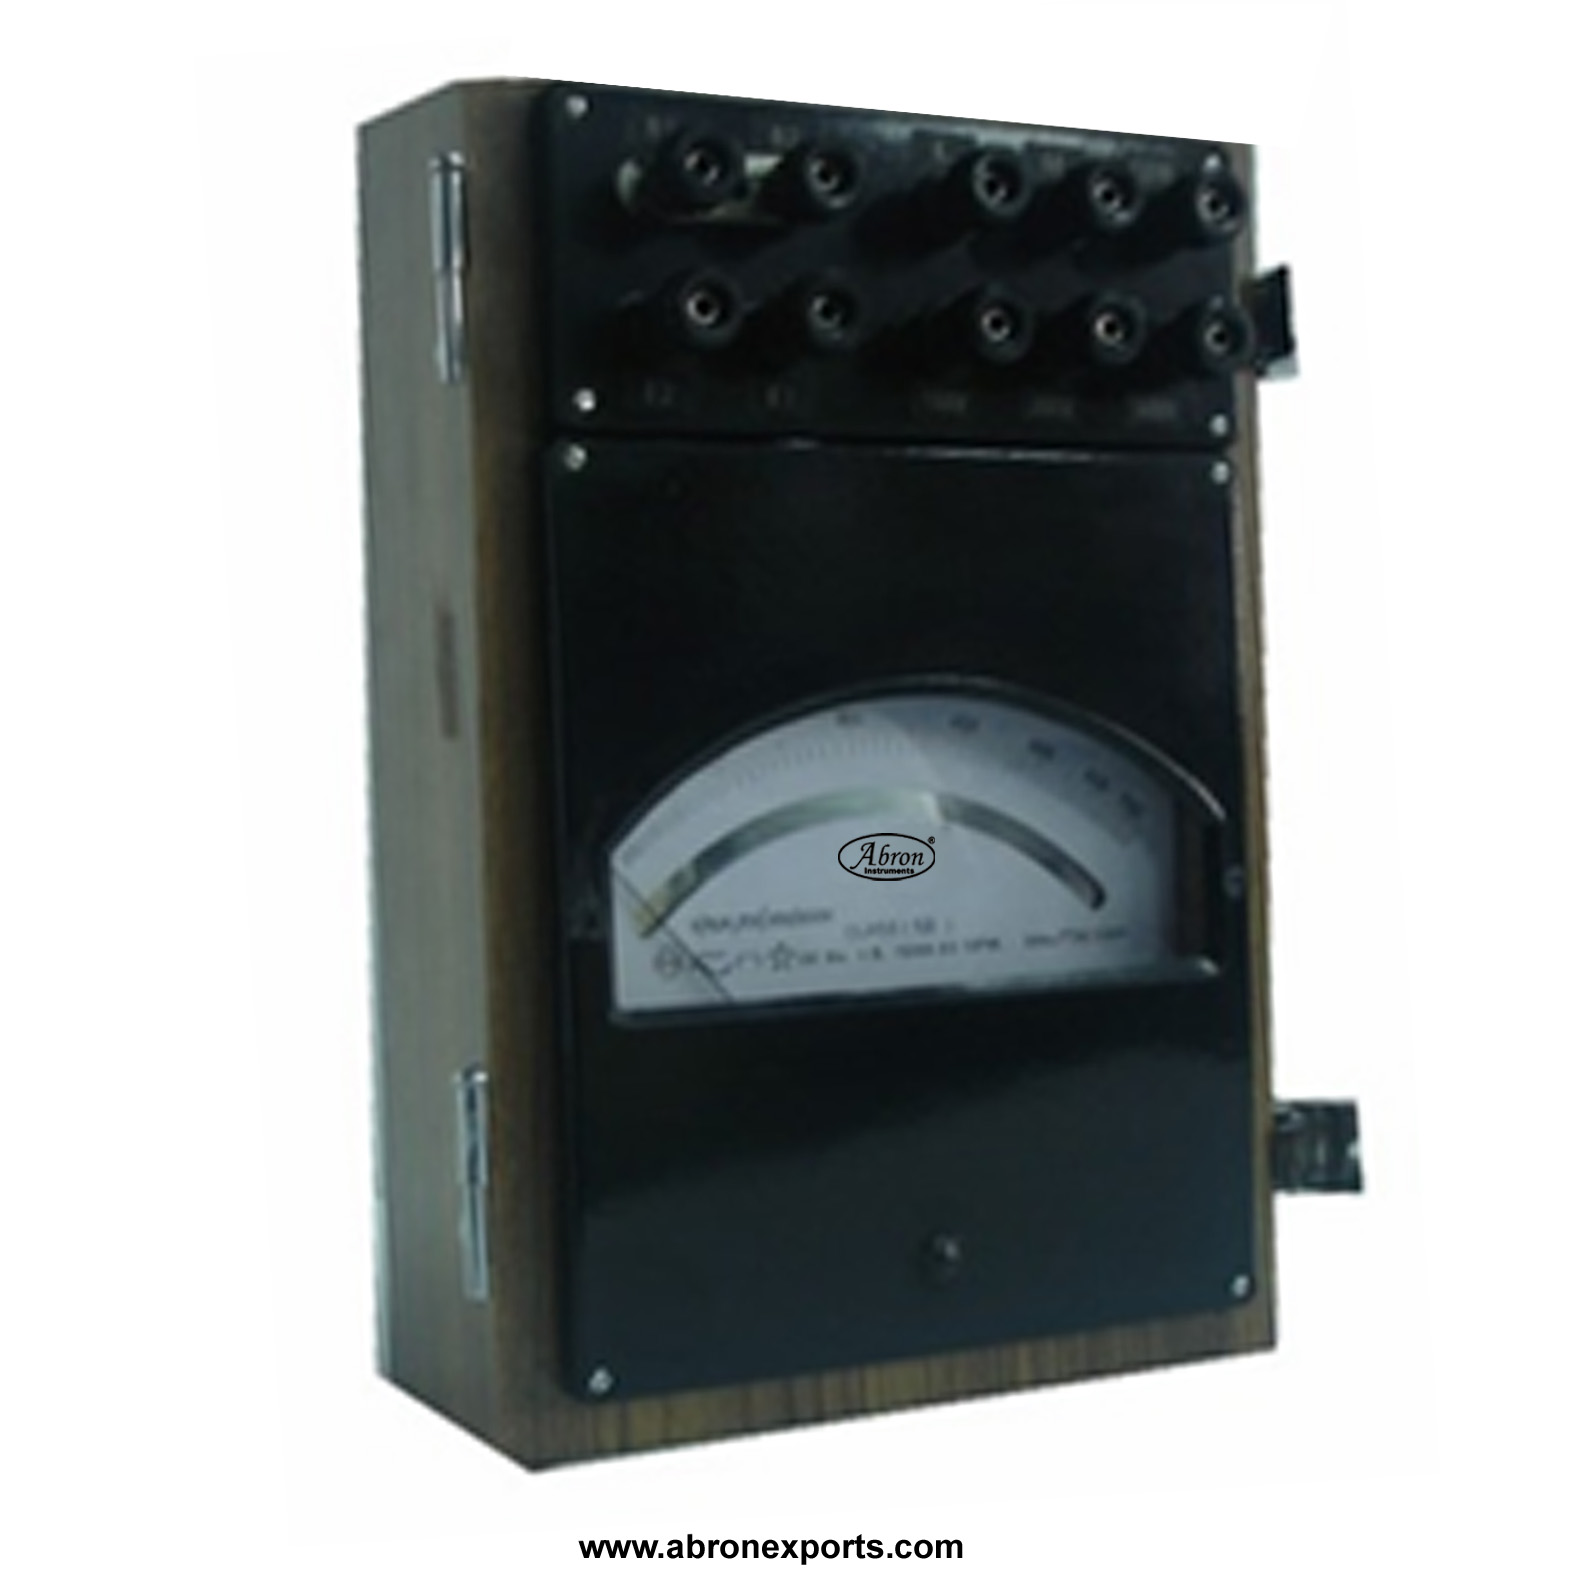 Dynamometer portable type watt meter abron AE-1433D